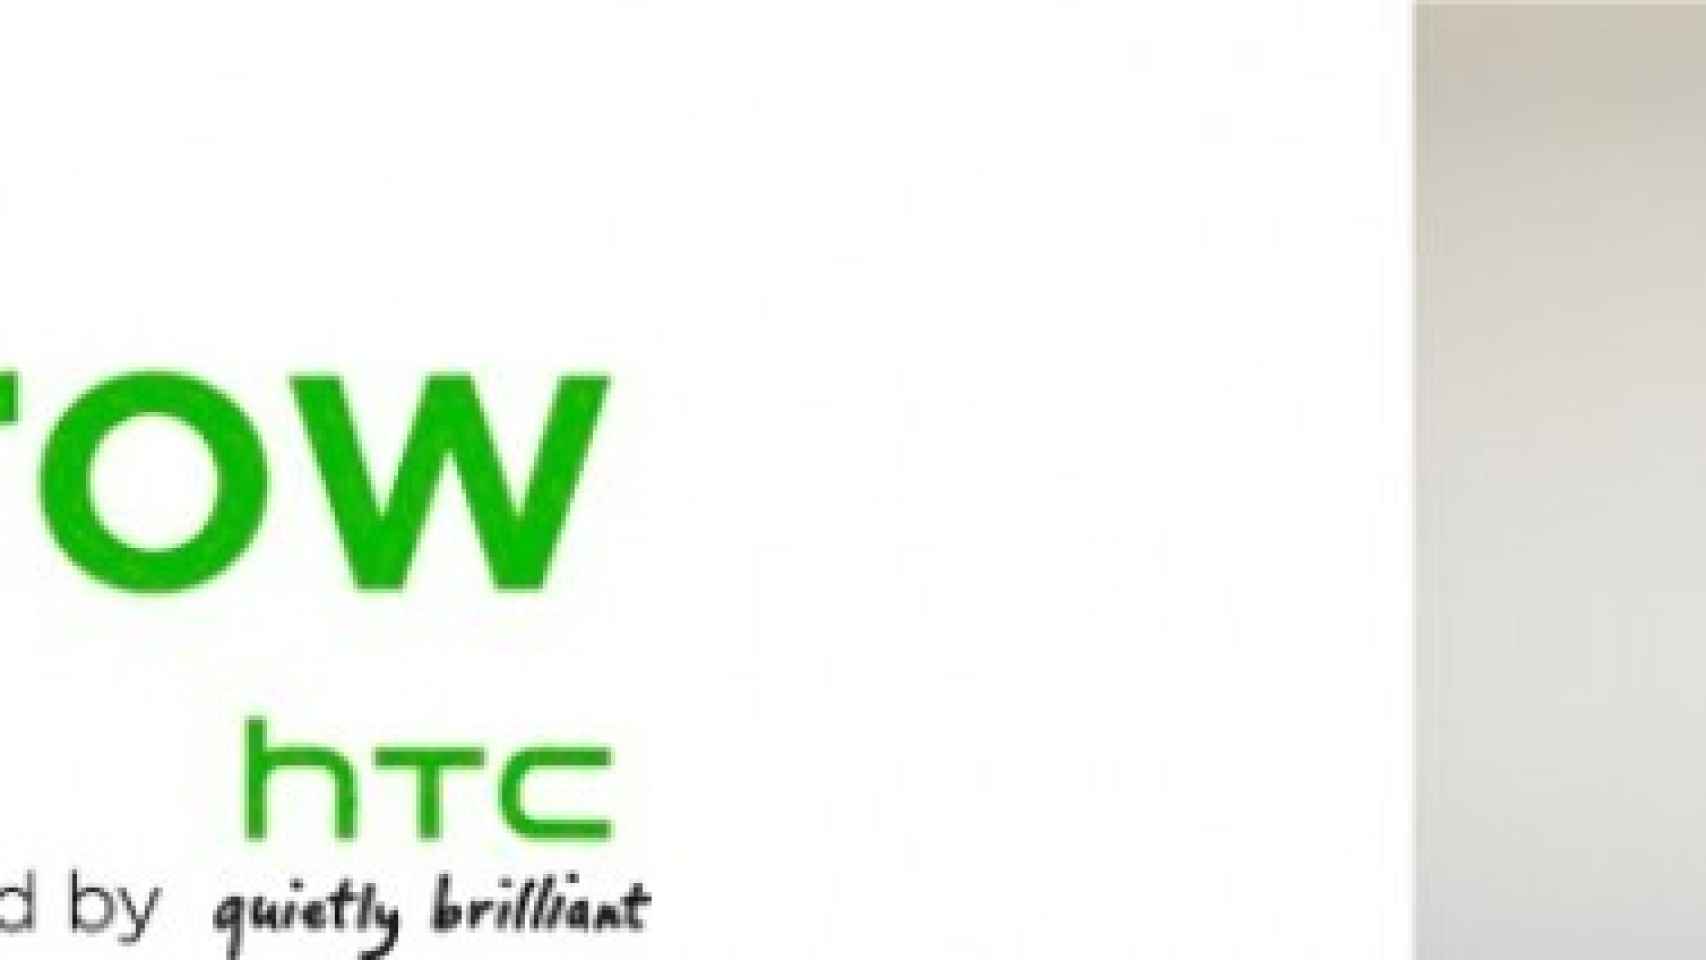 HTC Tomorrow Talks, tu idea para el teléfono del mañana